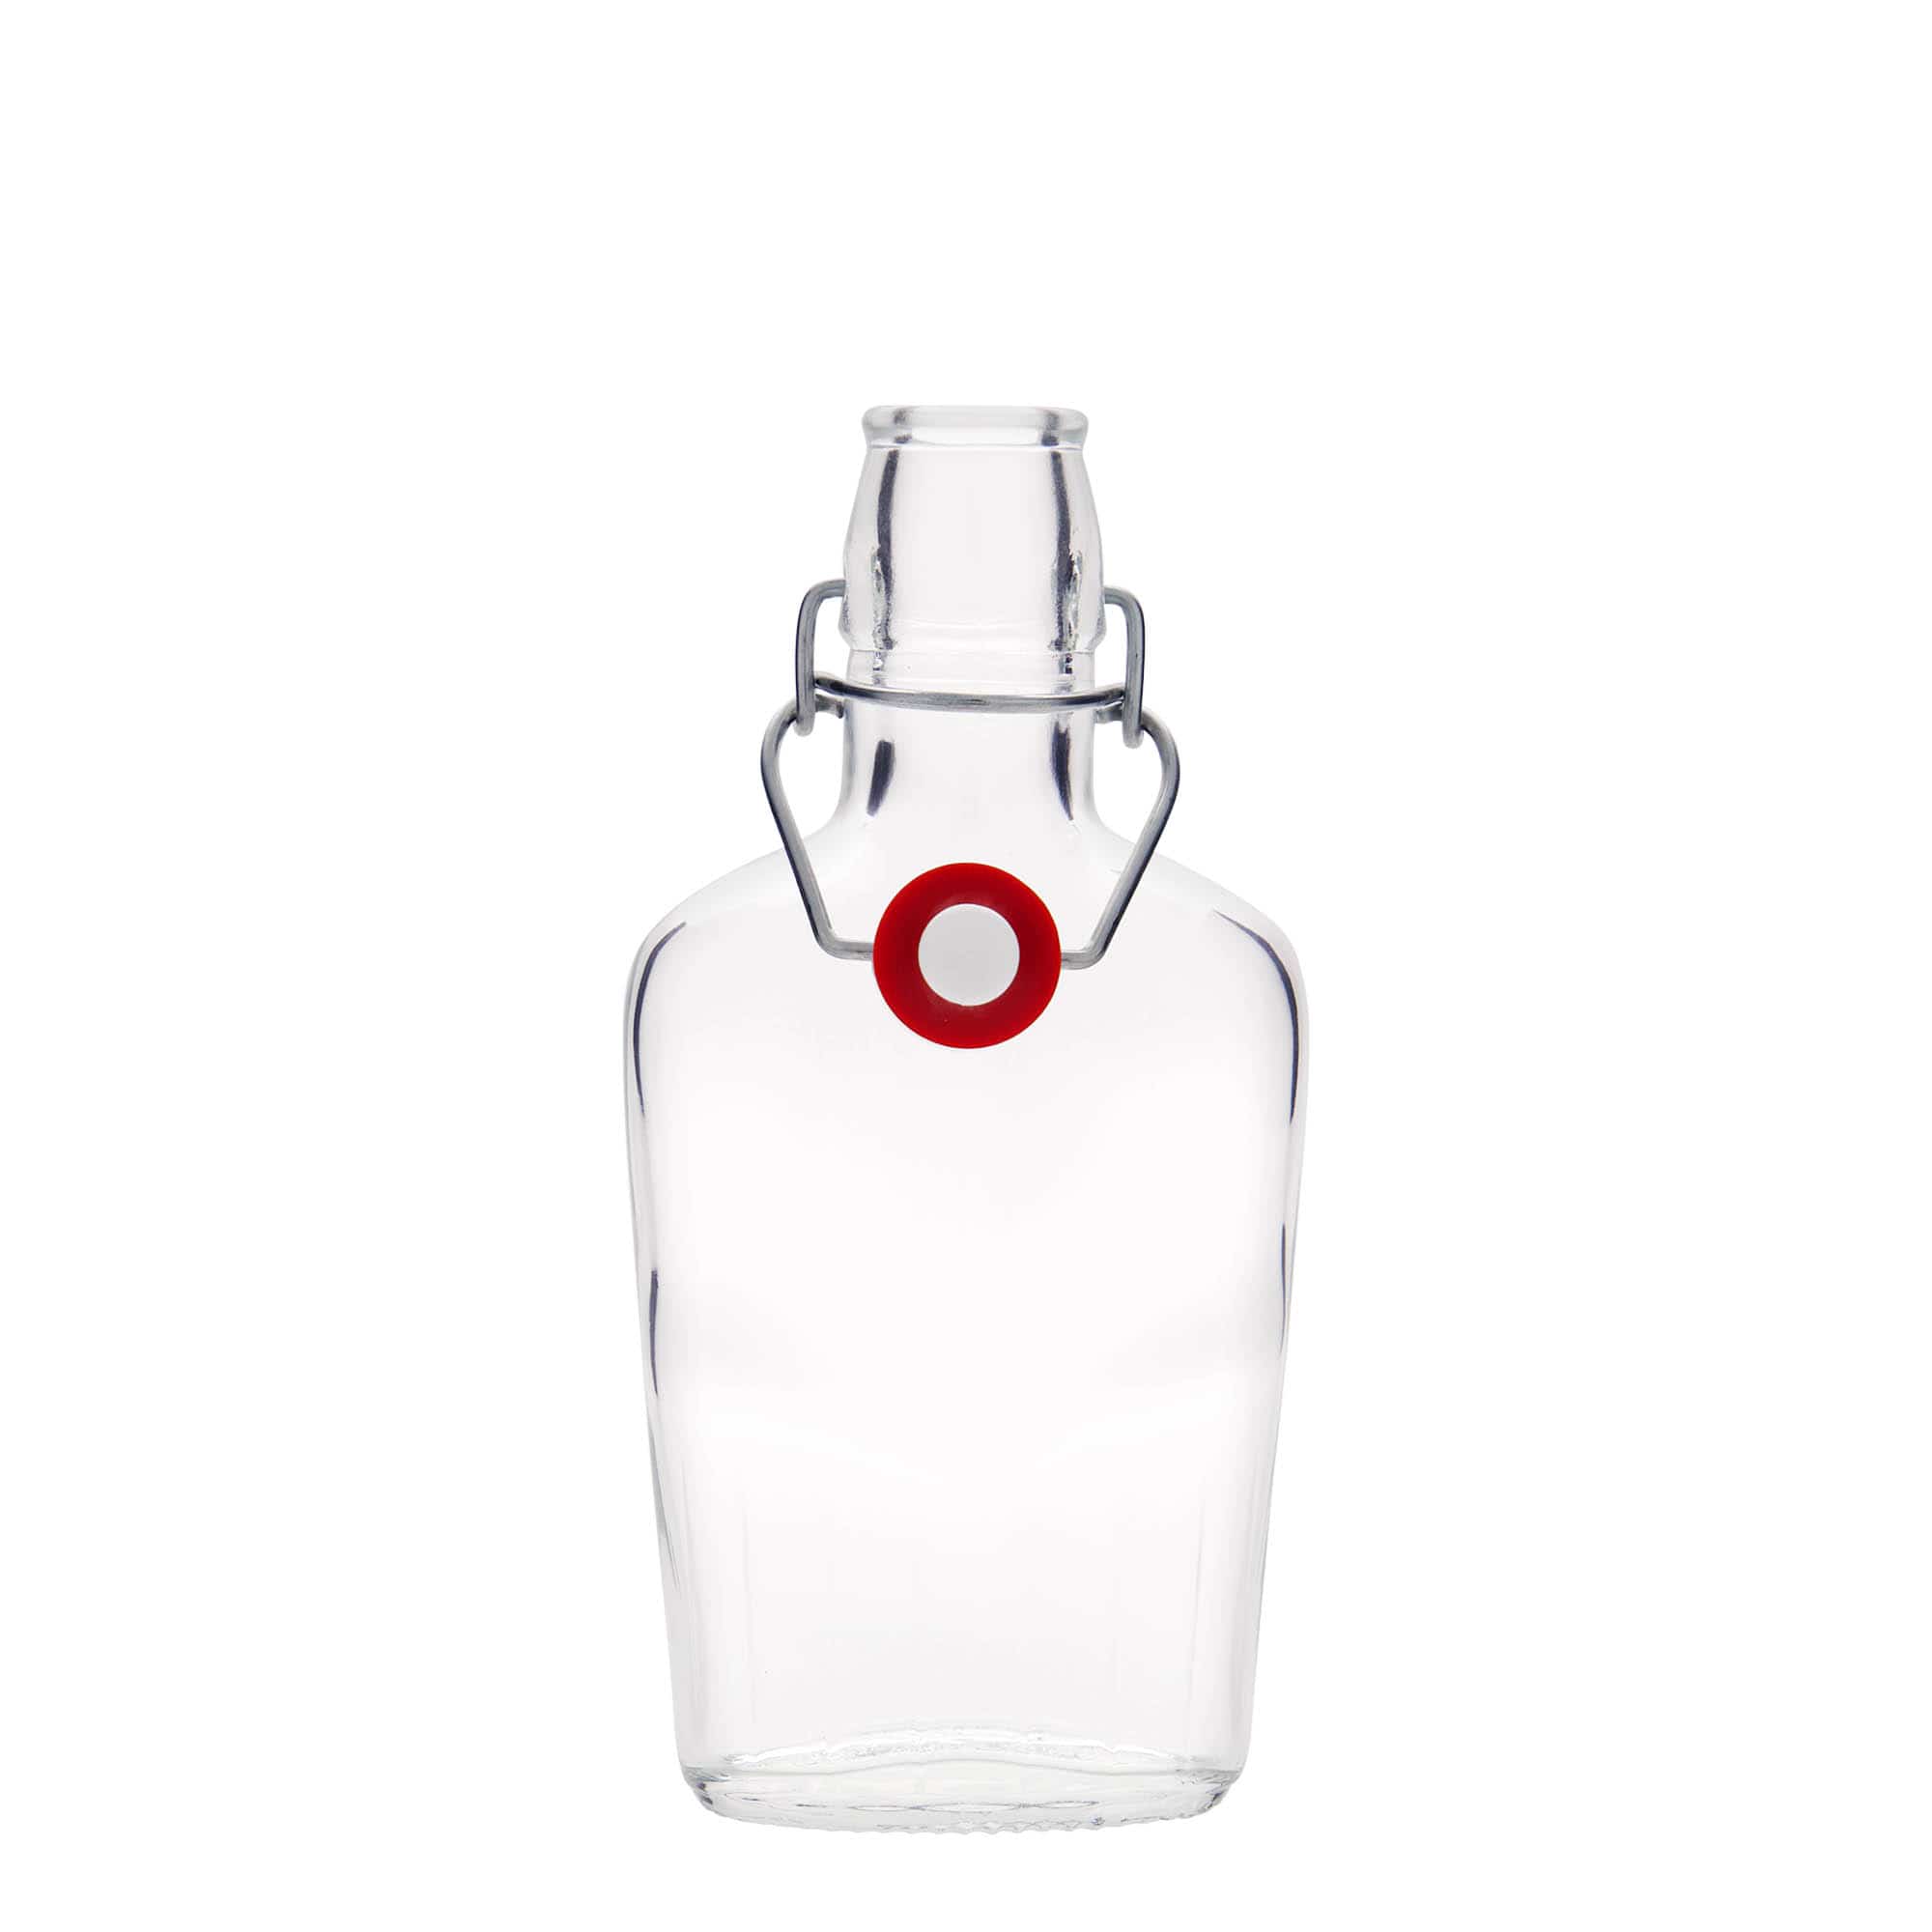 250 ml glasflaske 'Fiaschetta', oval, åbning: Patentlåg